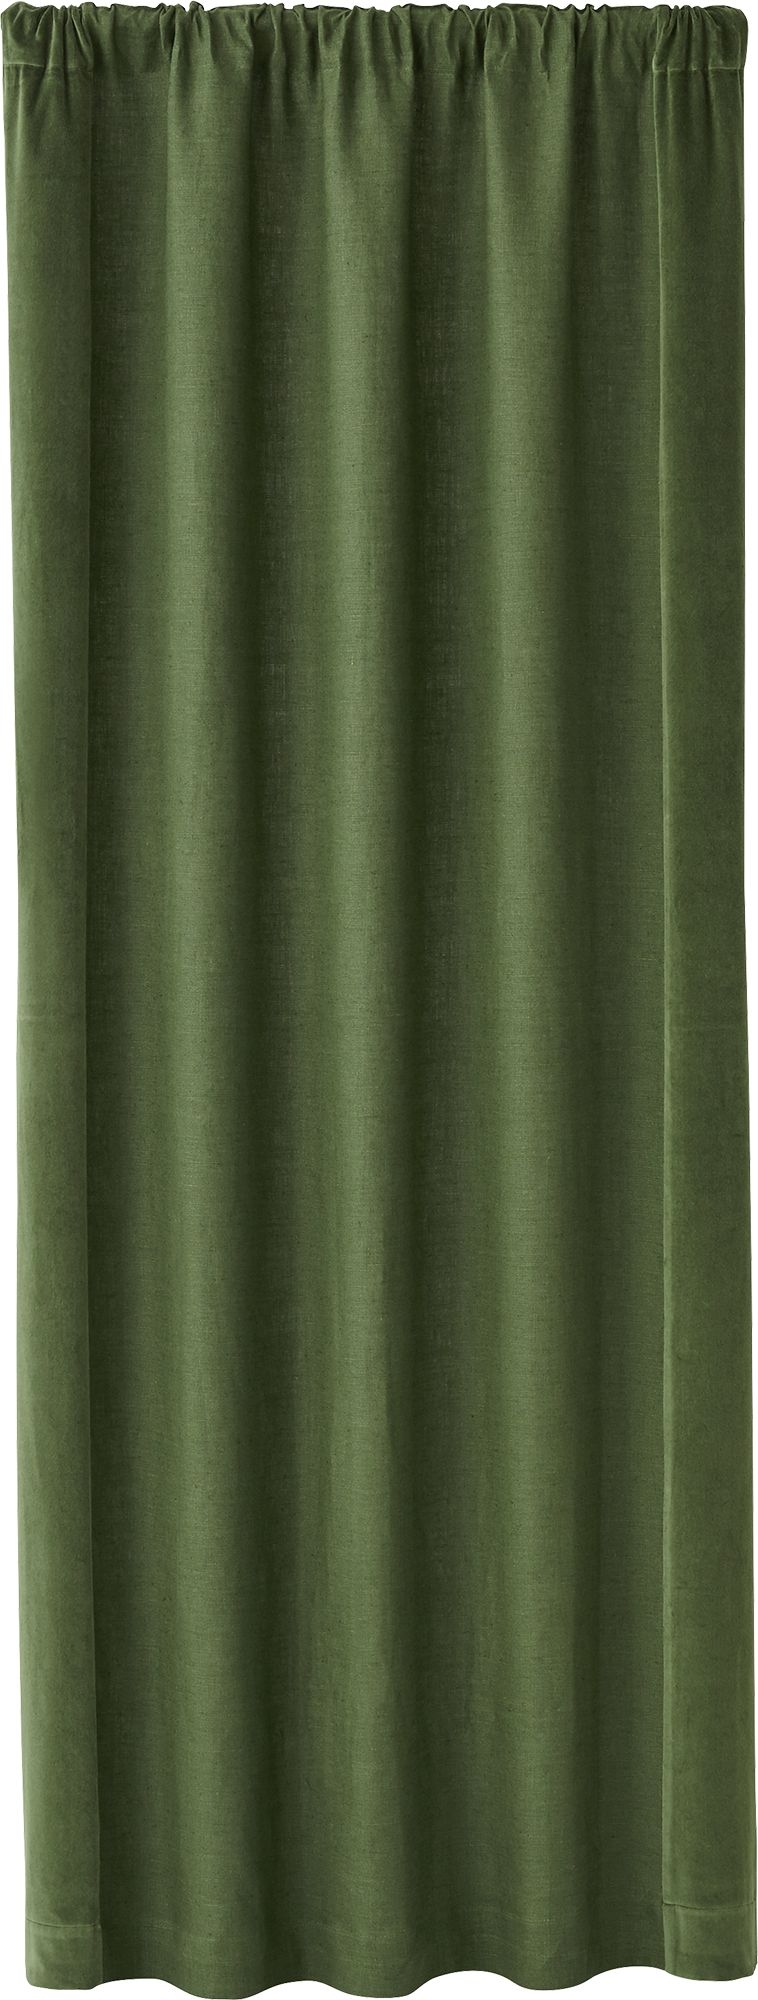 Ezria Green Linen Curtain Panel 48"x96" - Image 4